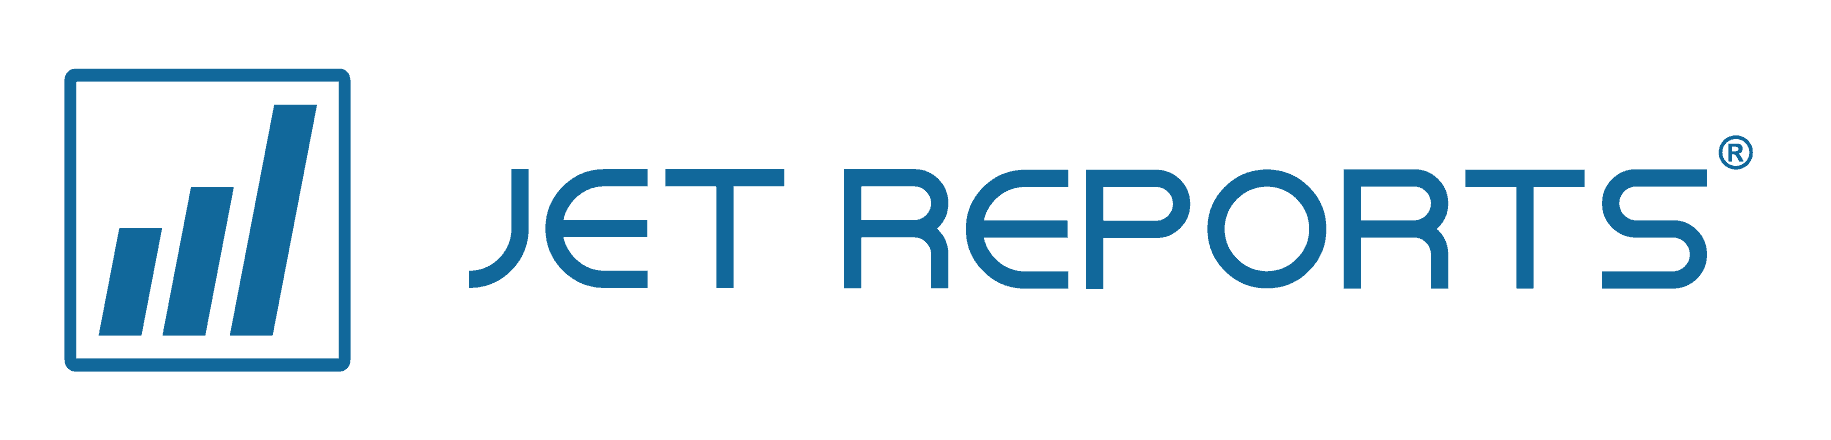 Jet reports logo 2021